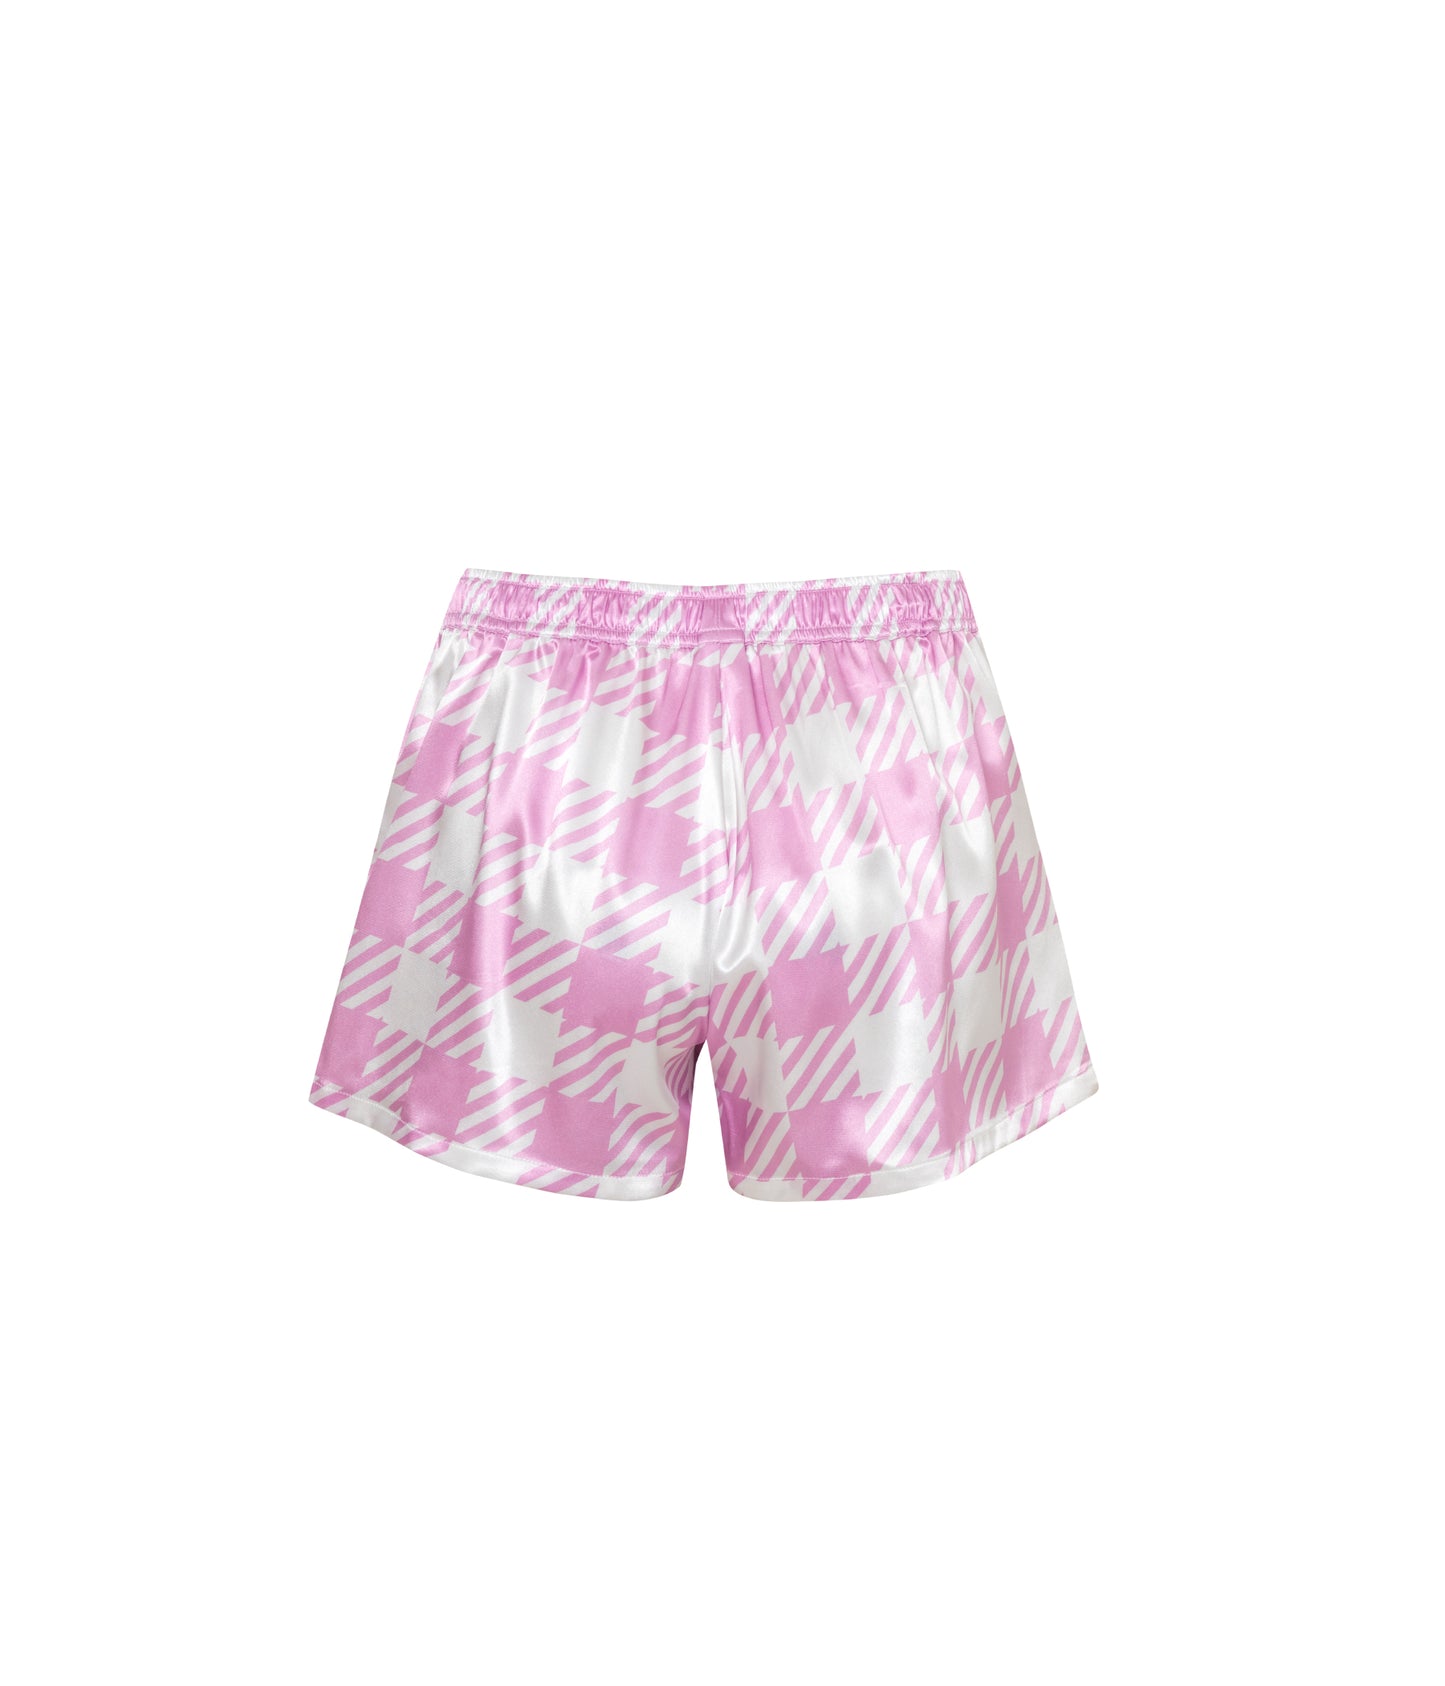 Verdelimon - Shorts - Santorini - Printed - Pink Squares - Back